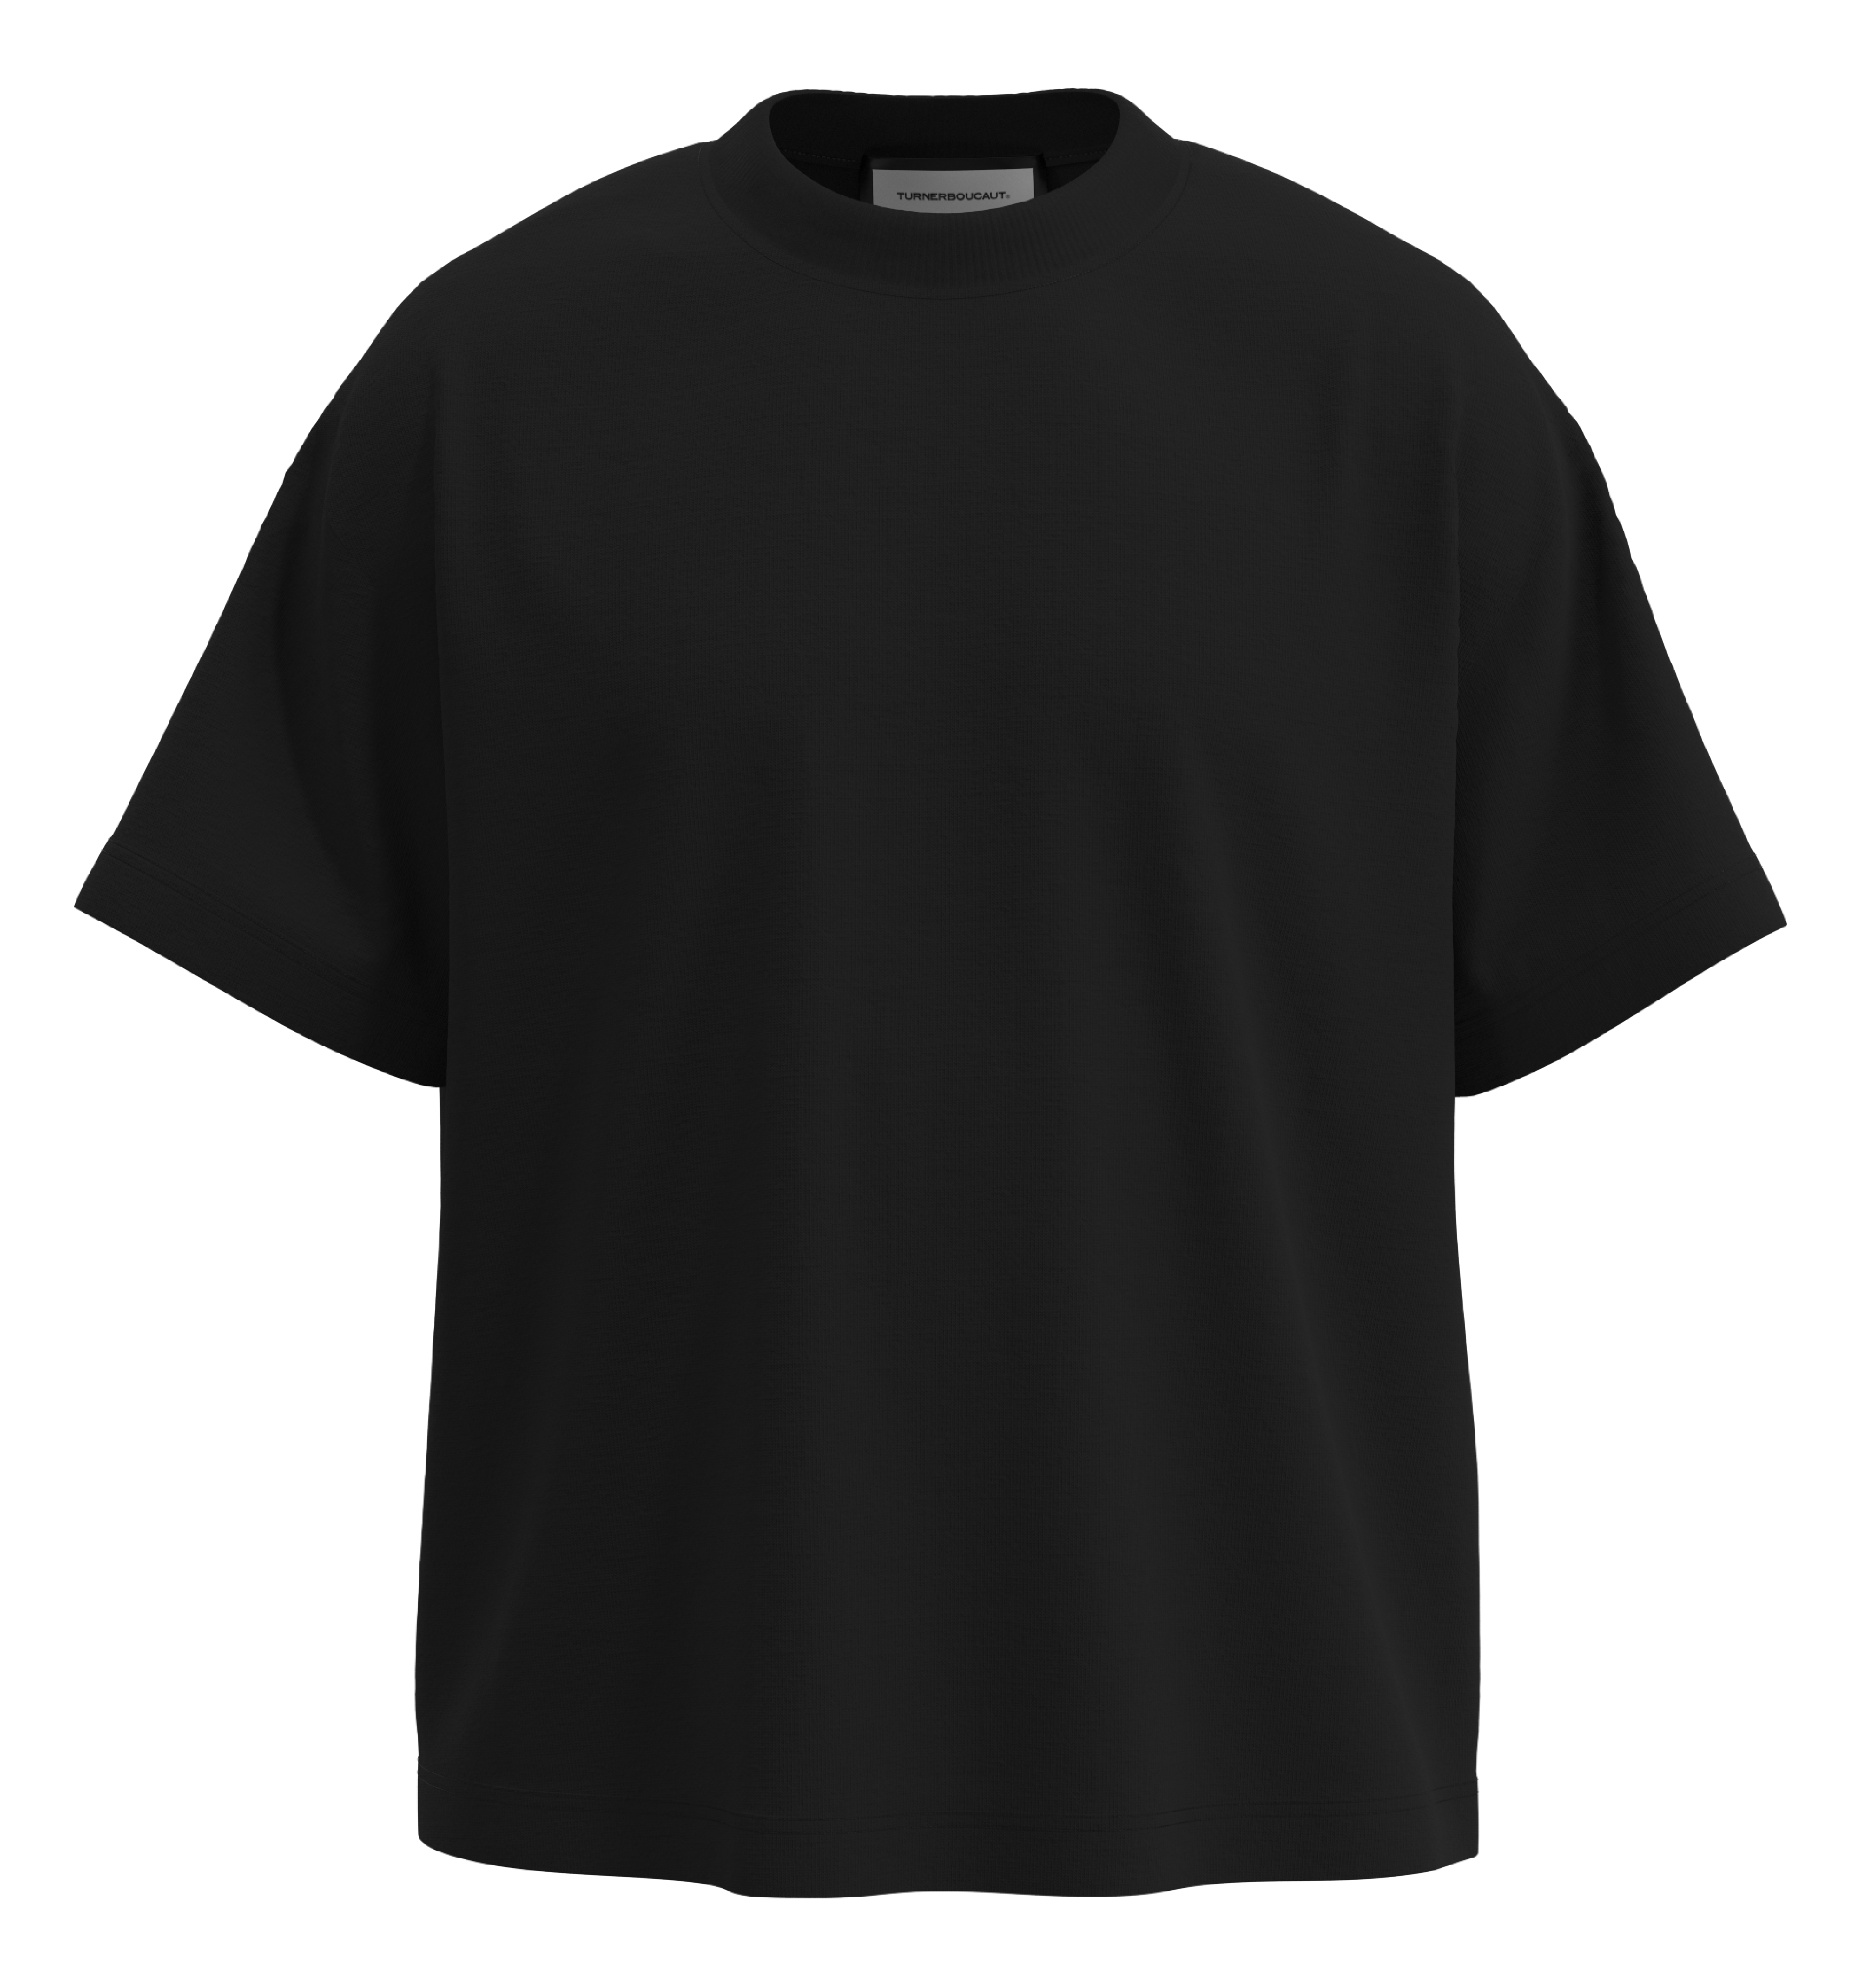 V3.0 Premium Blank T-Shirt (Black)